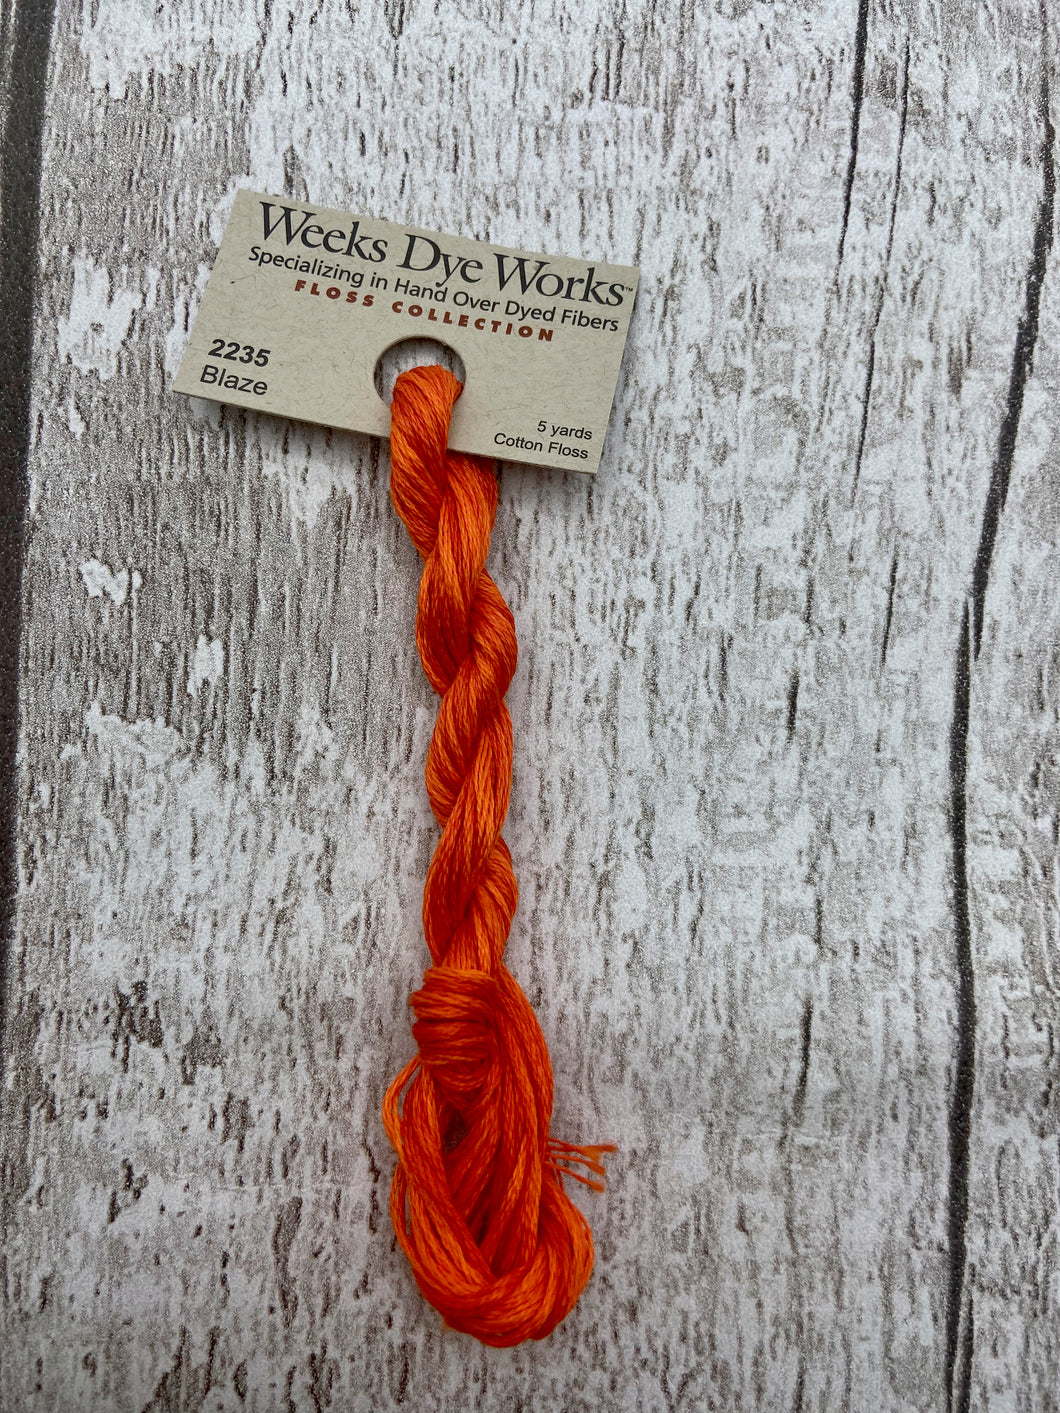 Blaze (#2235) Weeks Dye Works 6-strand cotton floss